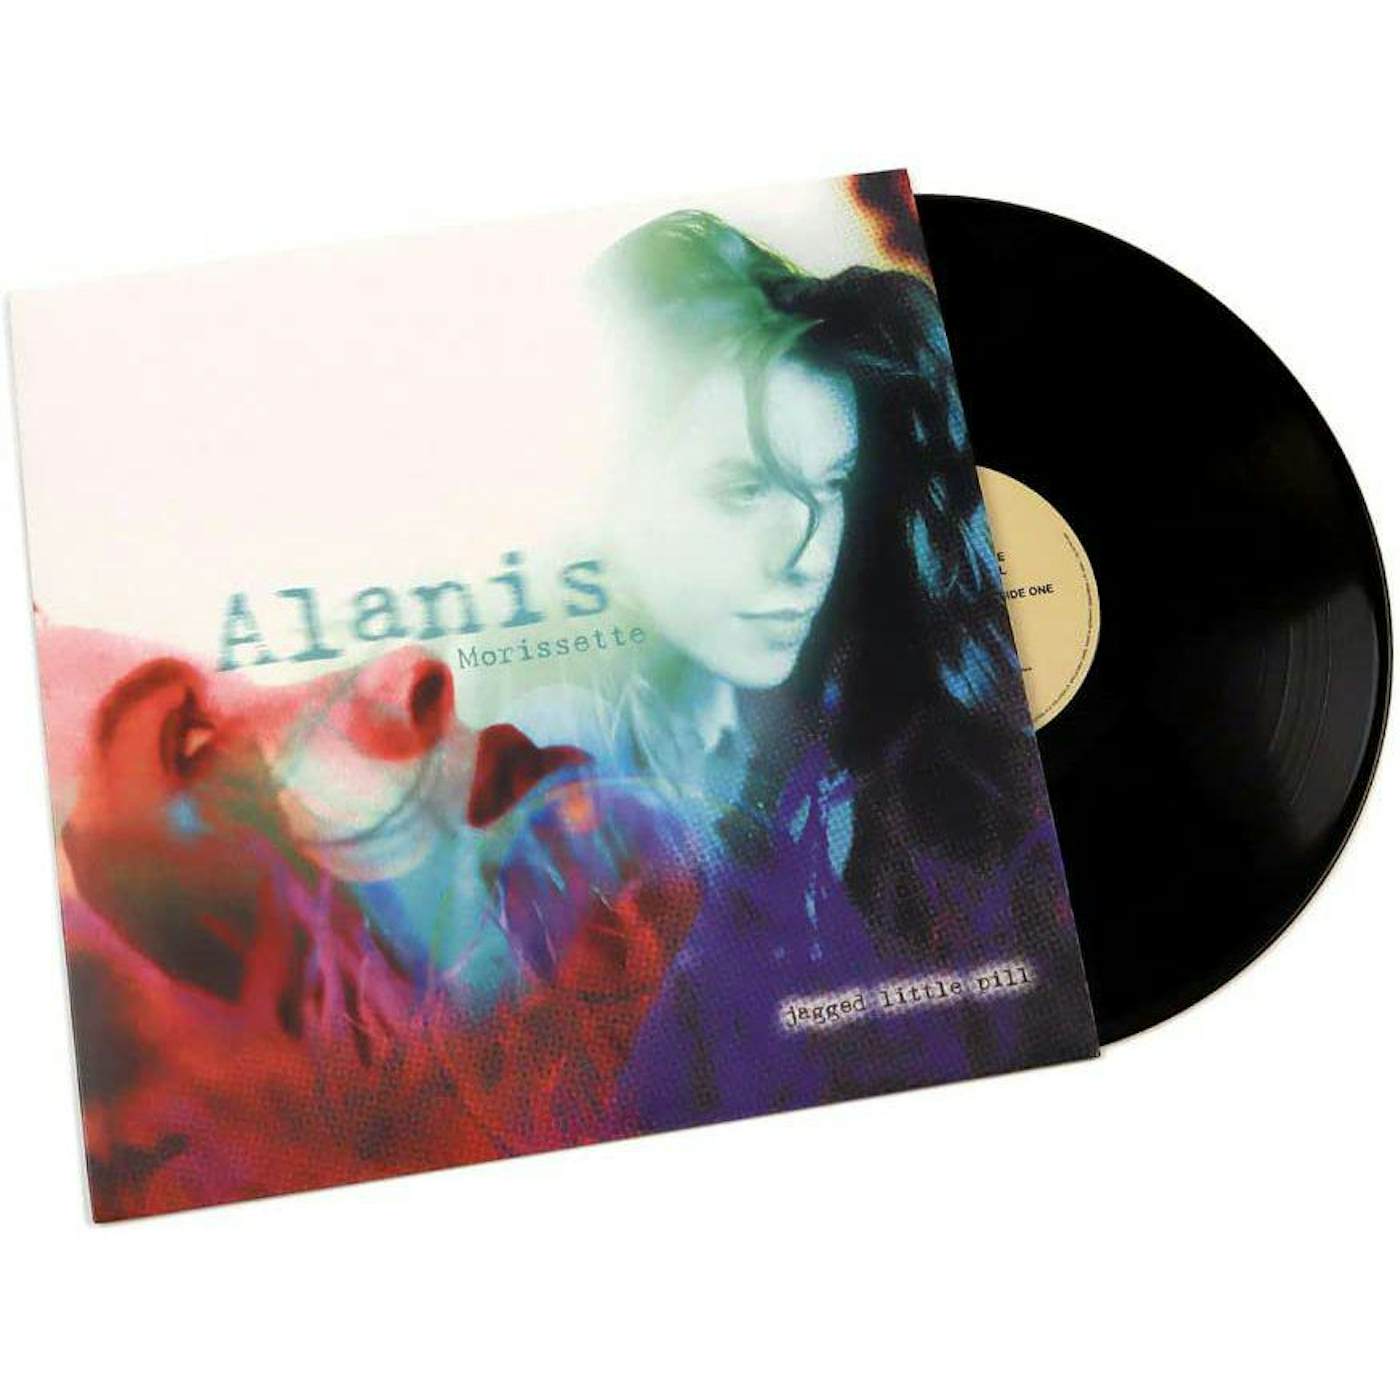 Alanis Morissette LP Vinyl Record - Jagged Little Pill